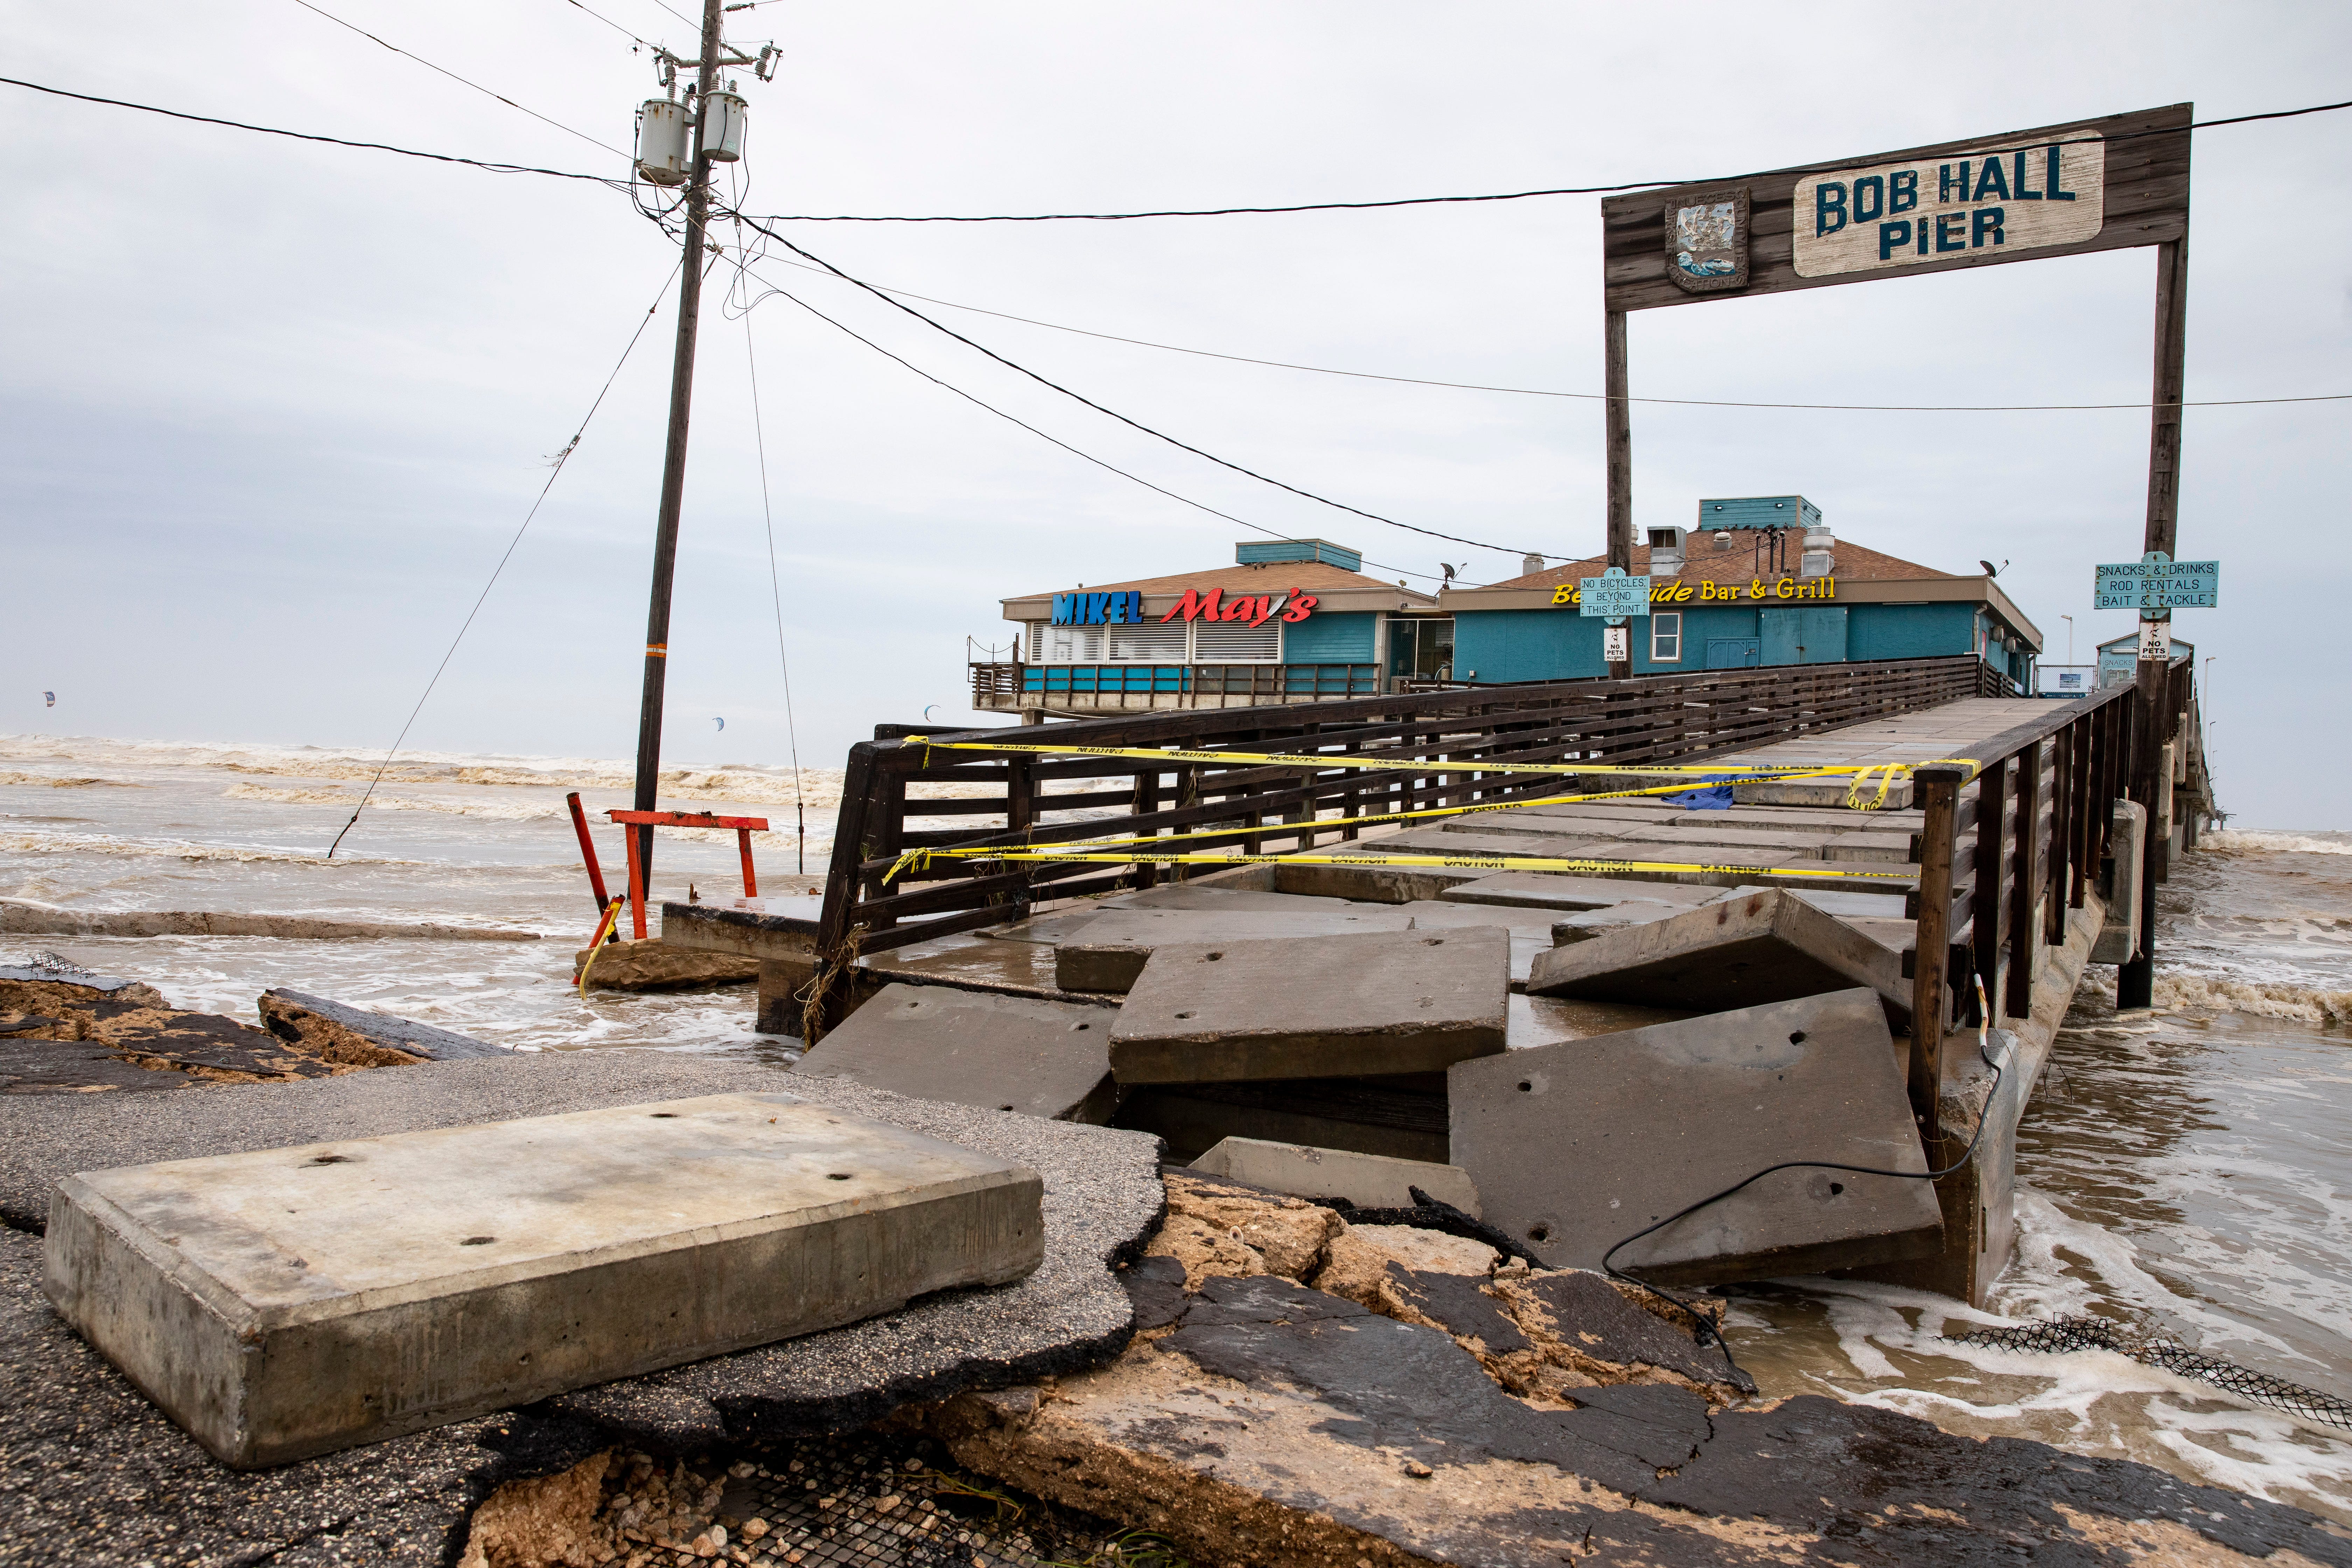 Hurricane Hanna S Damage Means Bob Hall Pier Will Need Full Rebuild